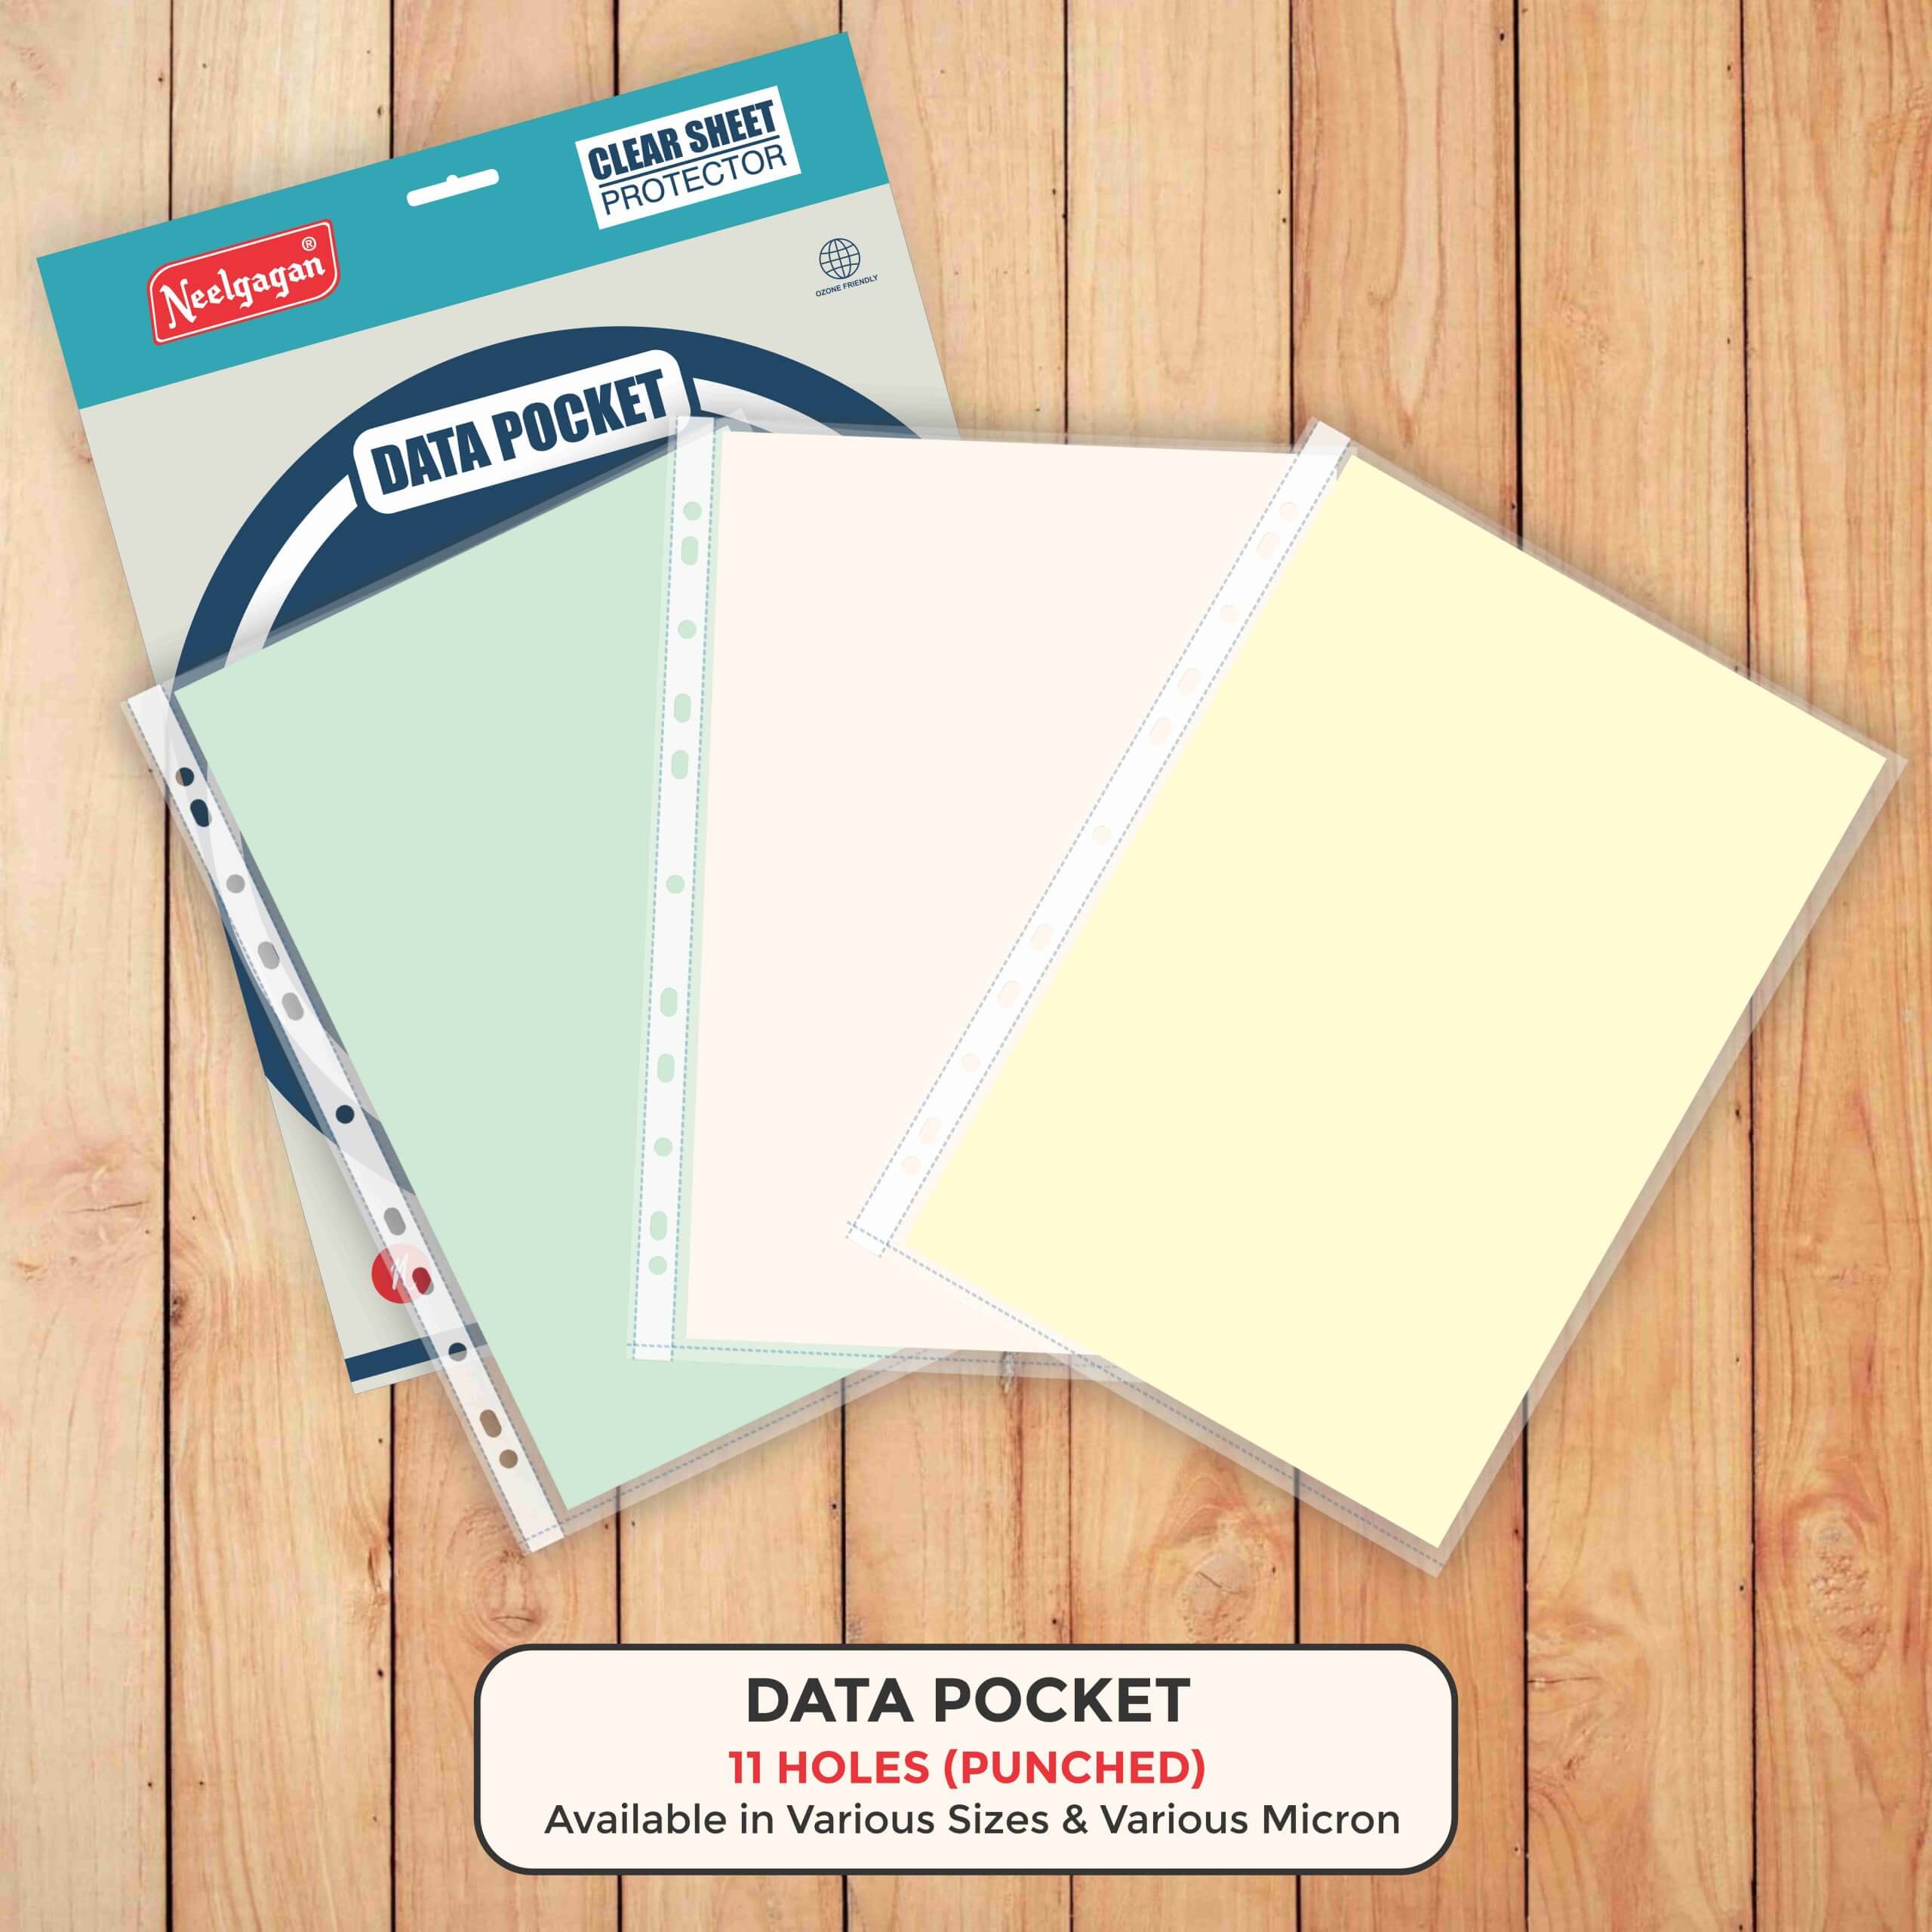 Data Pocket A3 - Designer Sheet Protector/Transparent Documents Sleeve (11-Holes Punched)